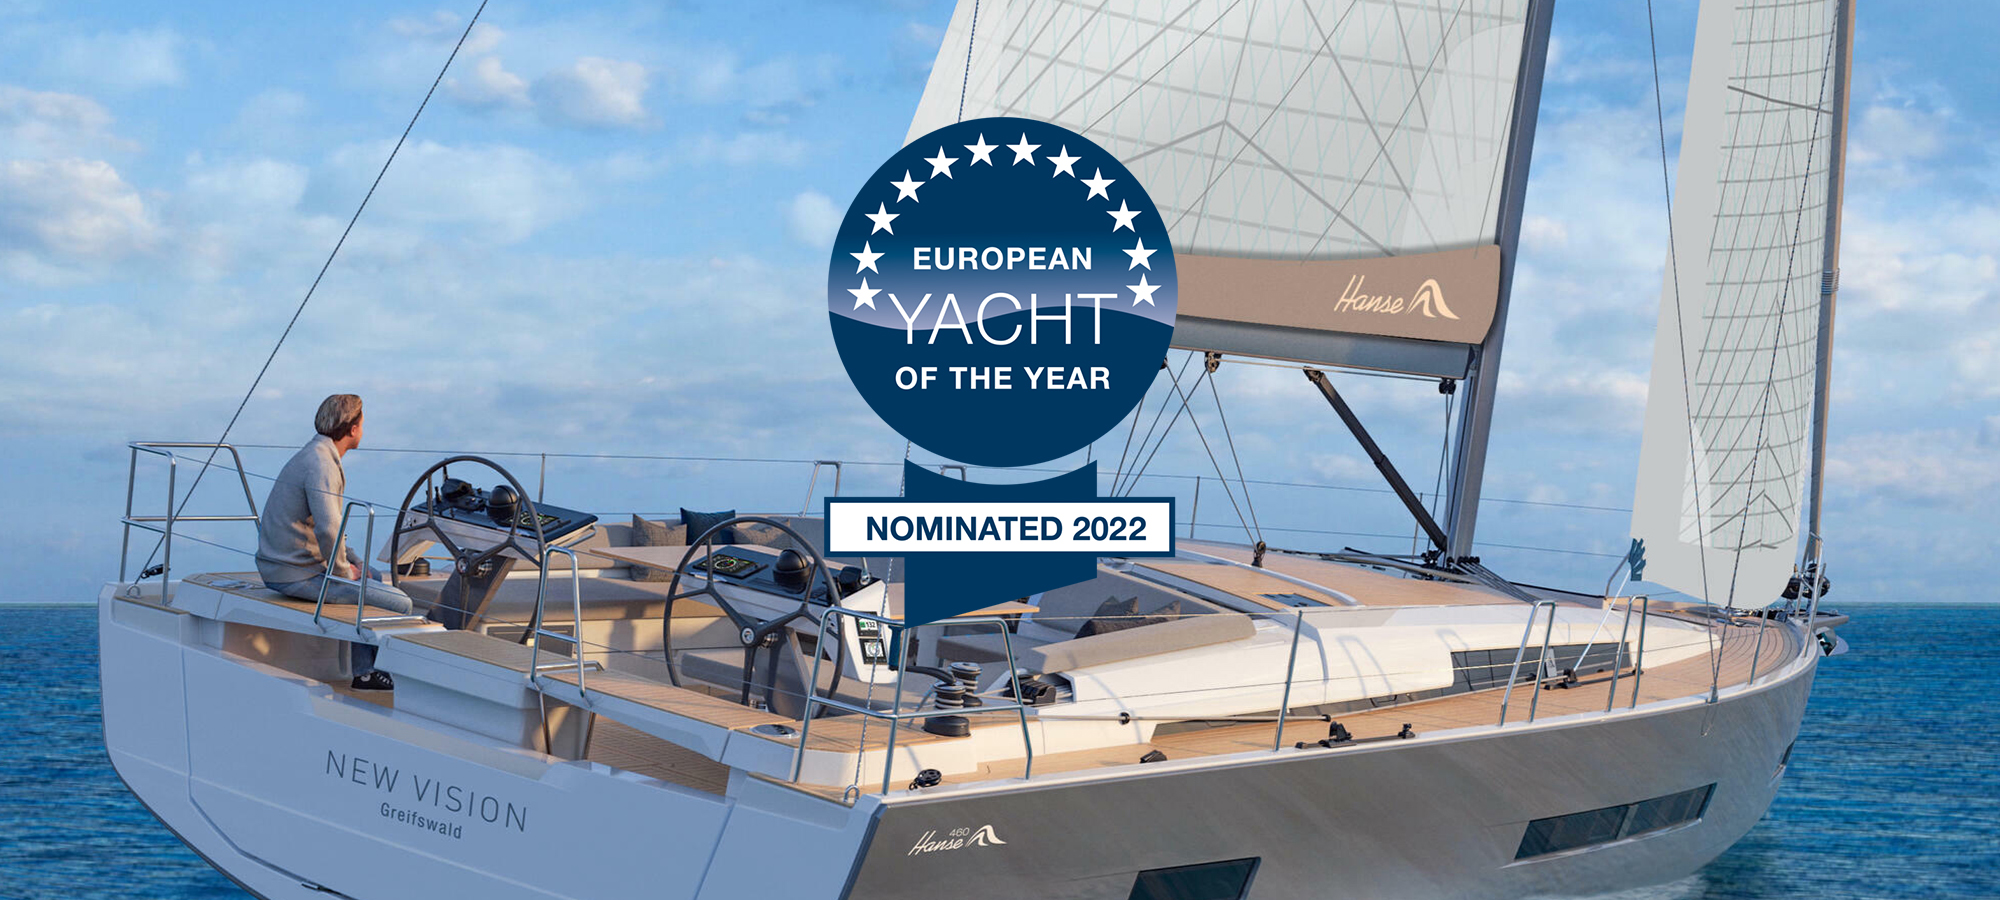 Hanse 460 - "European Yacht of the Year 2022" nomination